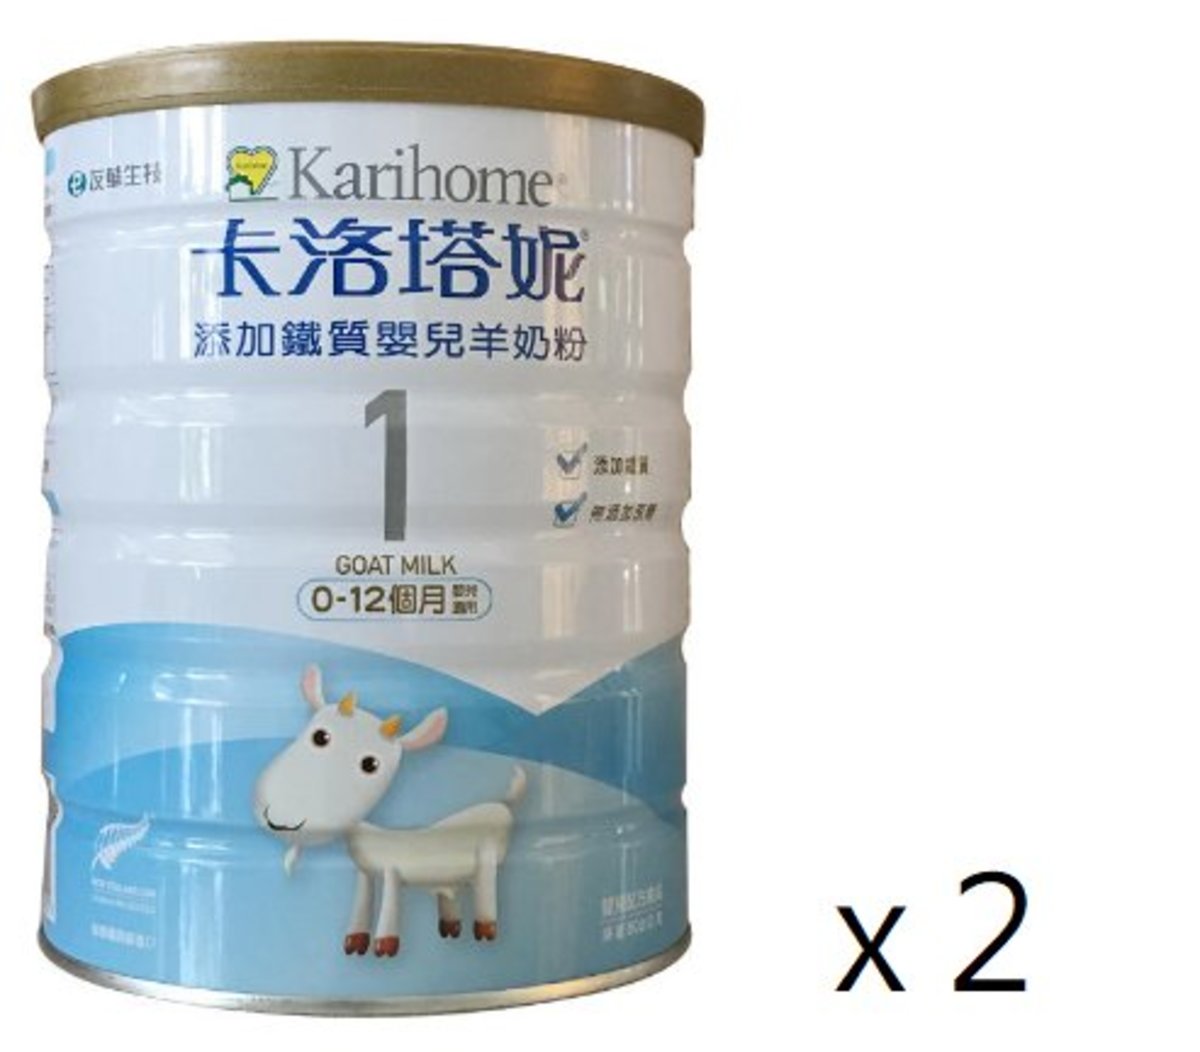 KARIHOME Karihome Infant Goat Milk 800g x 2  [Parallel Import]